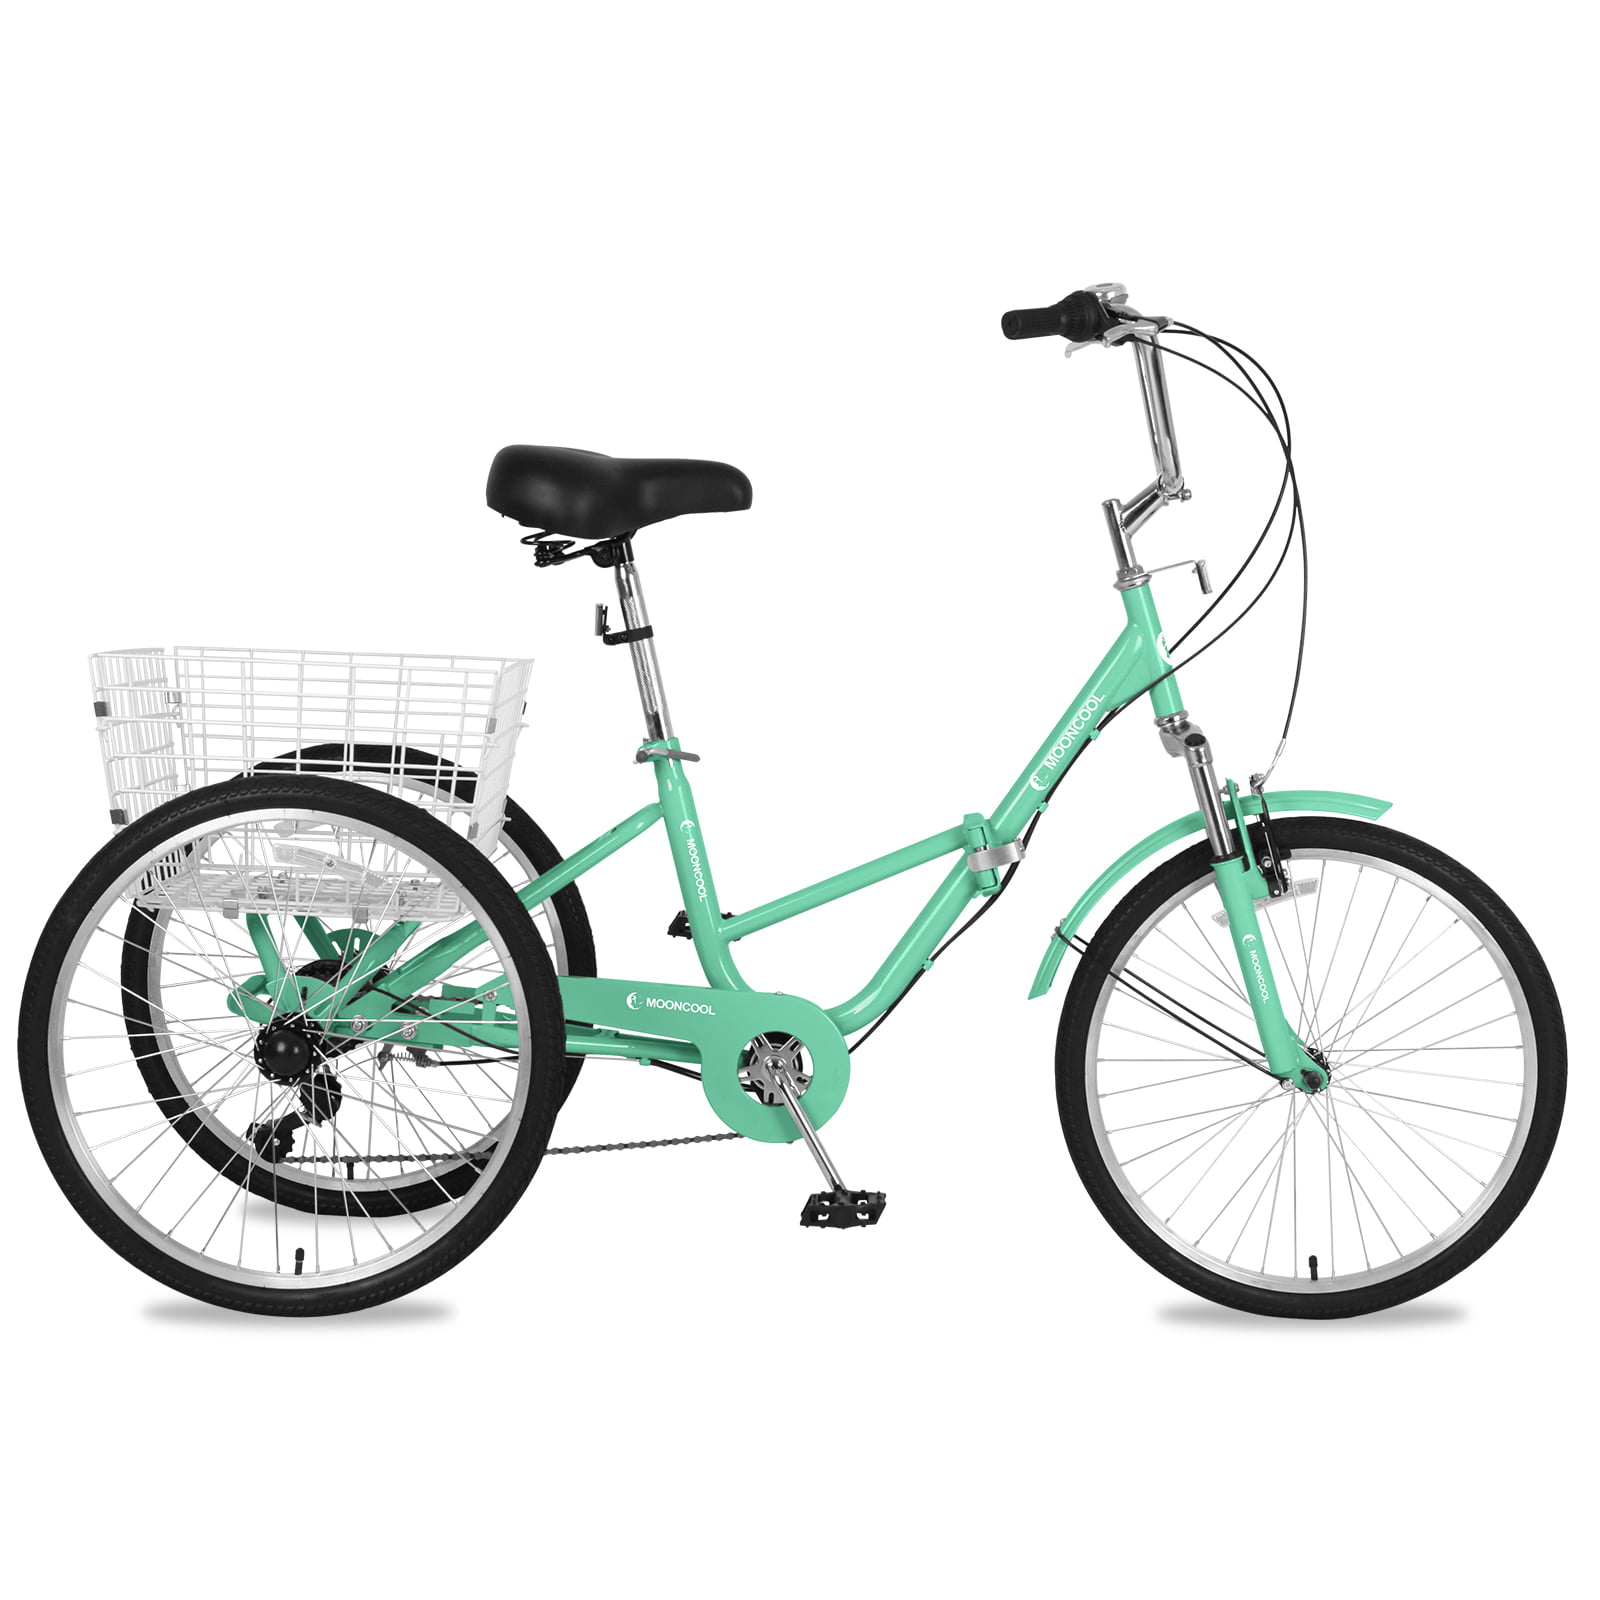 16/20/24/26 inch Adult Tricycle 3-wheel Bike Bicycle MTB Cruise Trike w/ Basket 